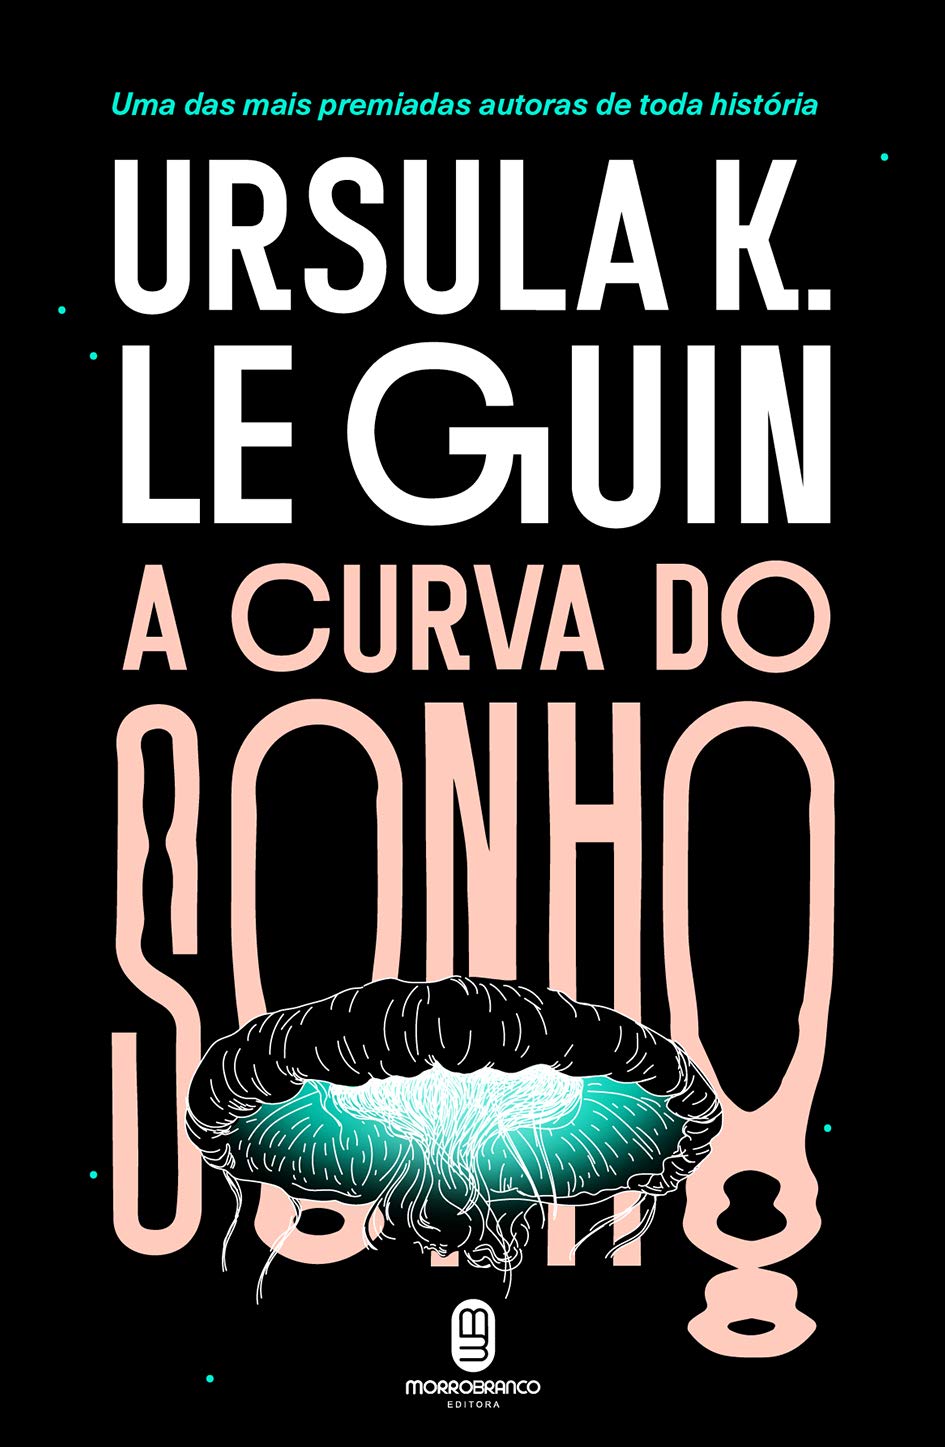 Ursula K. Le Guin: A Curva do Sonho (Português language, 2021, Morro Branco)